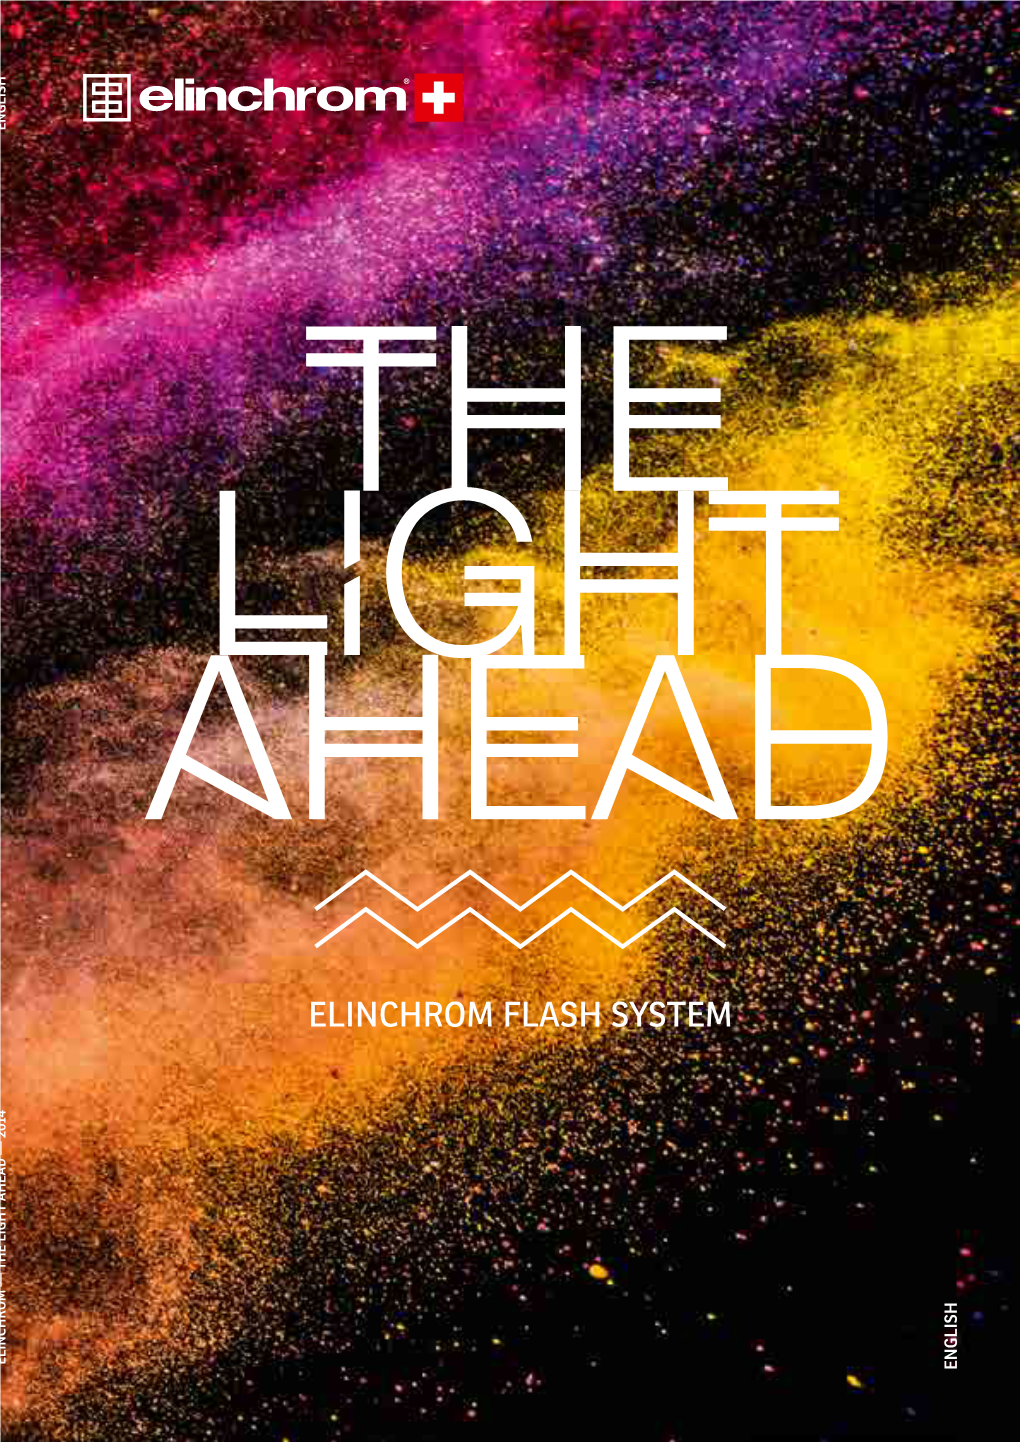 Elinchrom Flash System